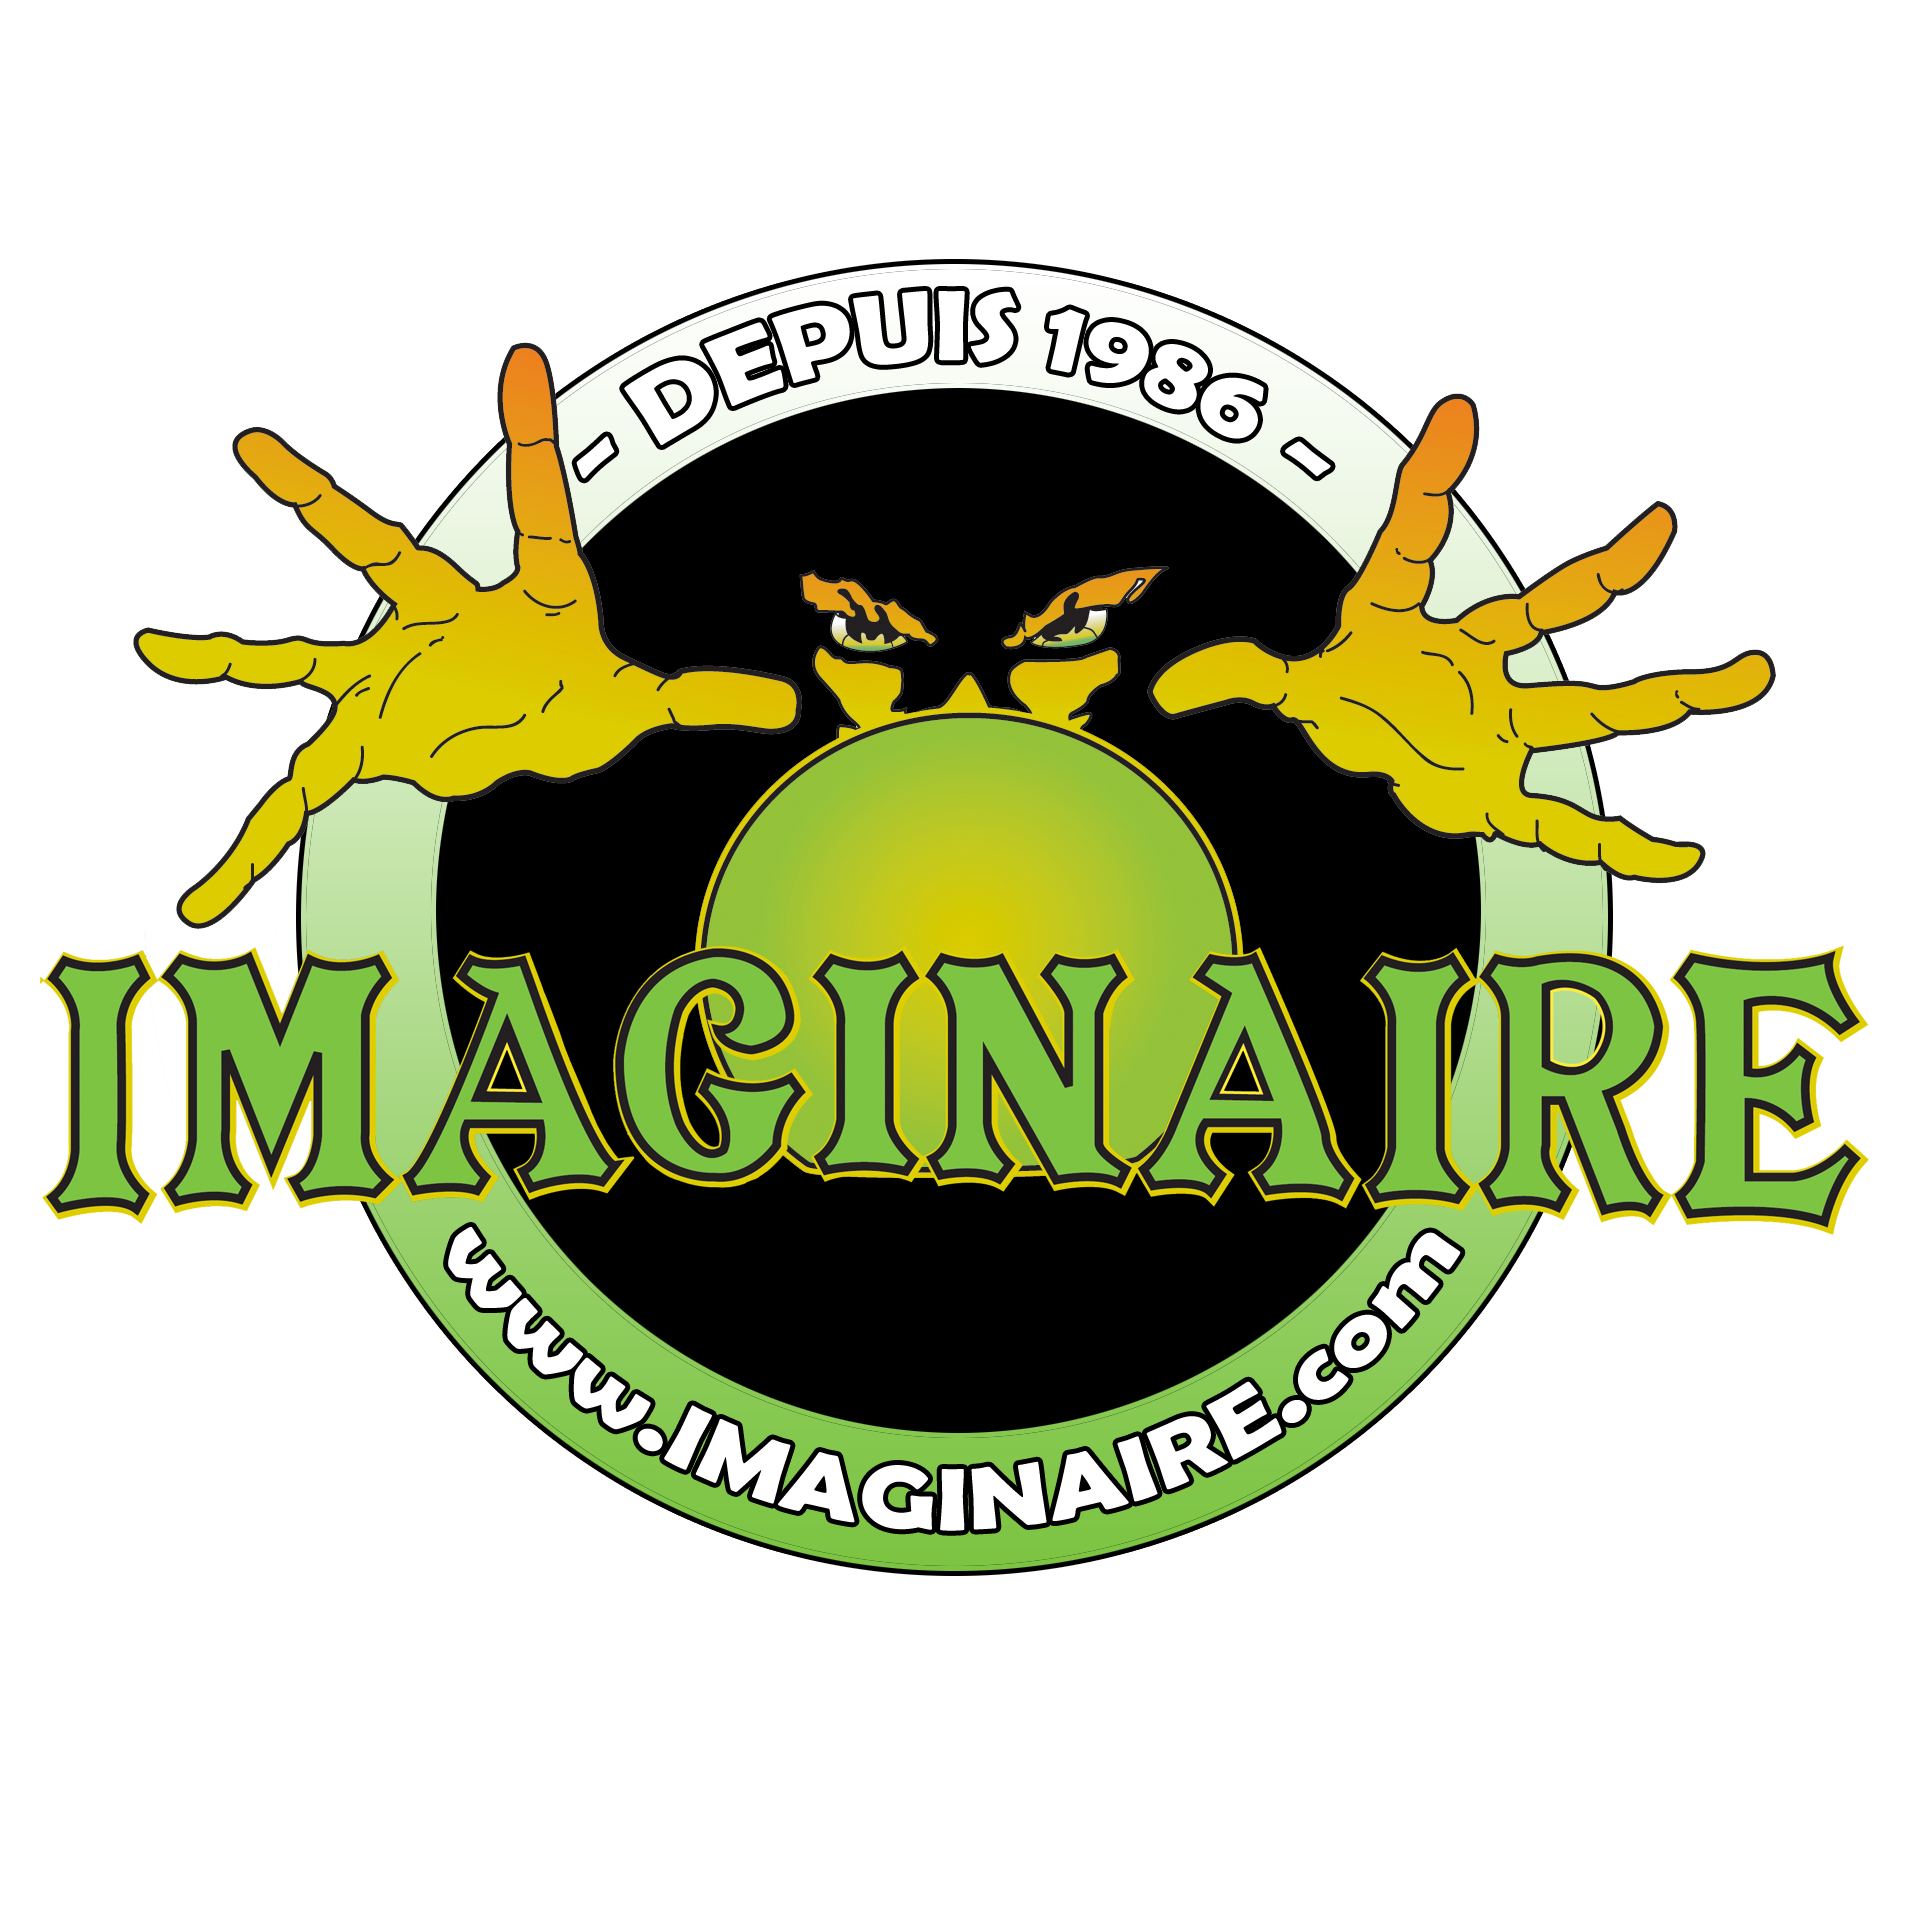 Logo Imaginaire